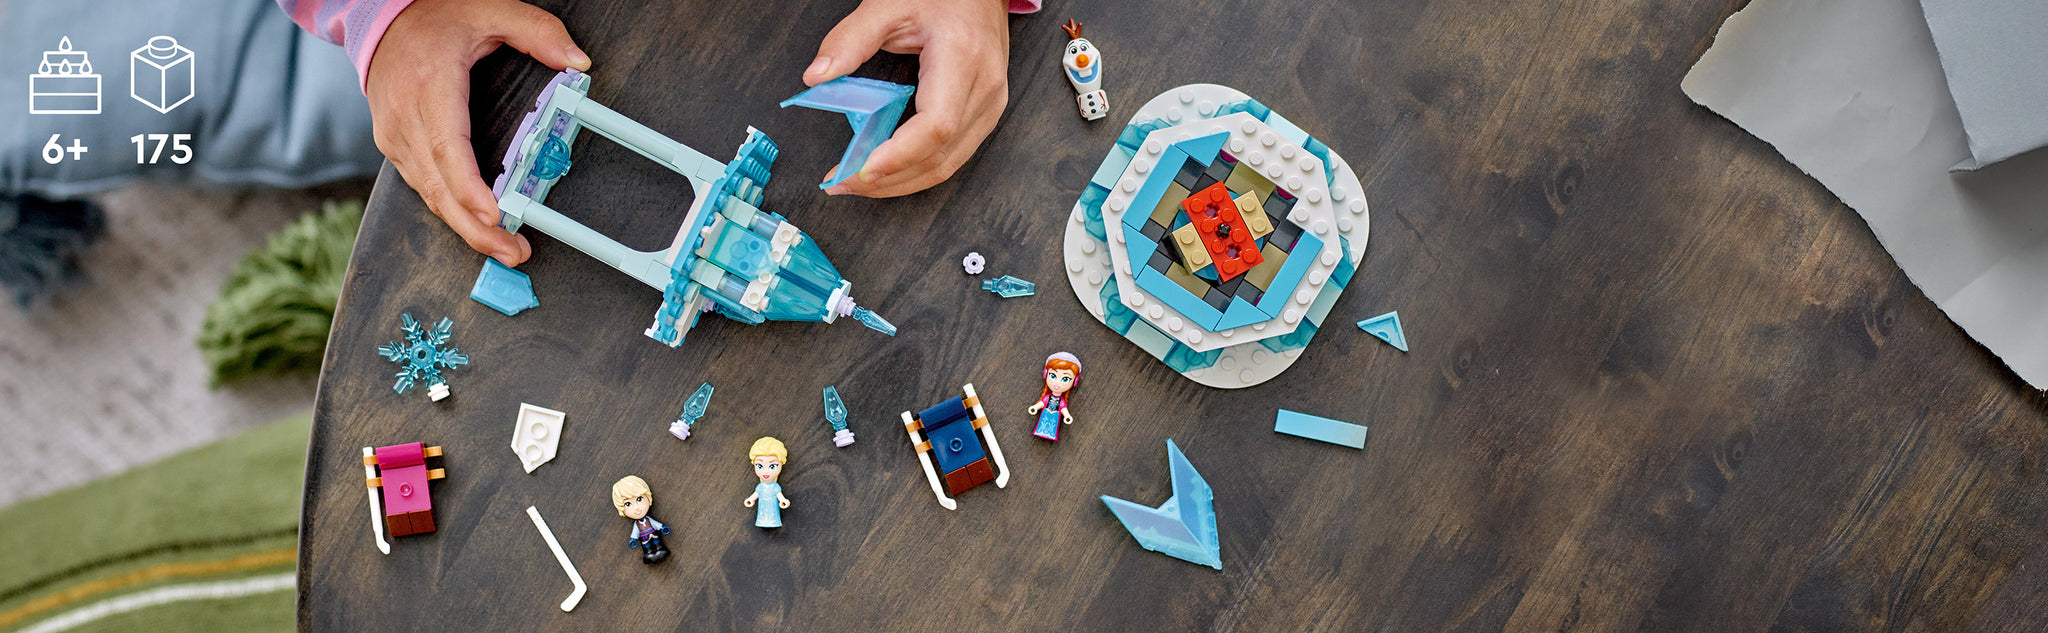 LEGO 43218 Anna and Elsa's magical merry-go-round